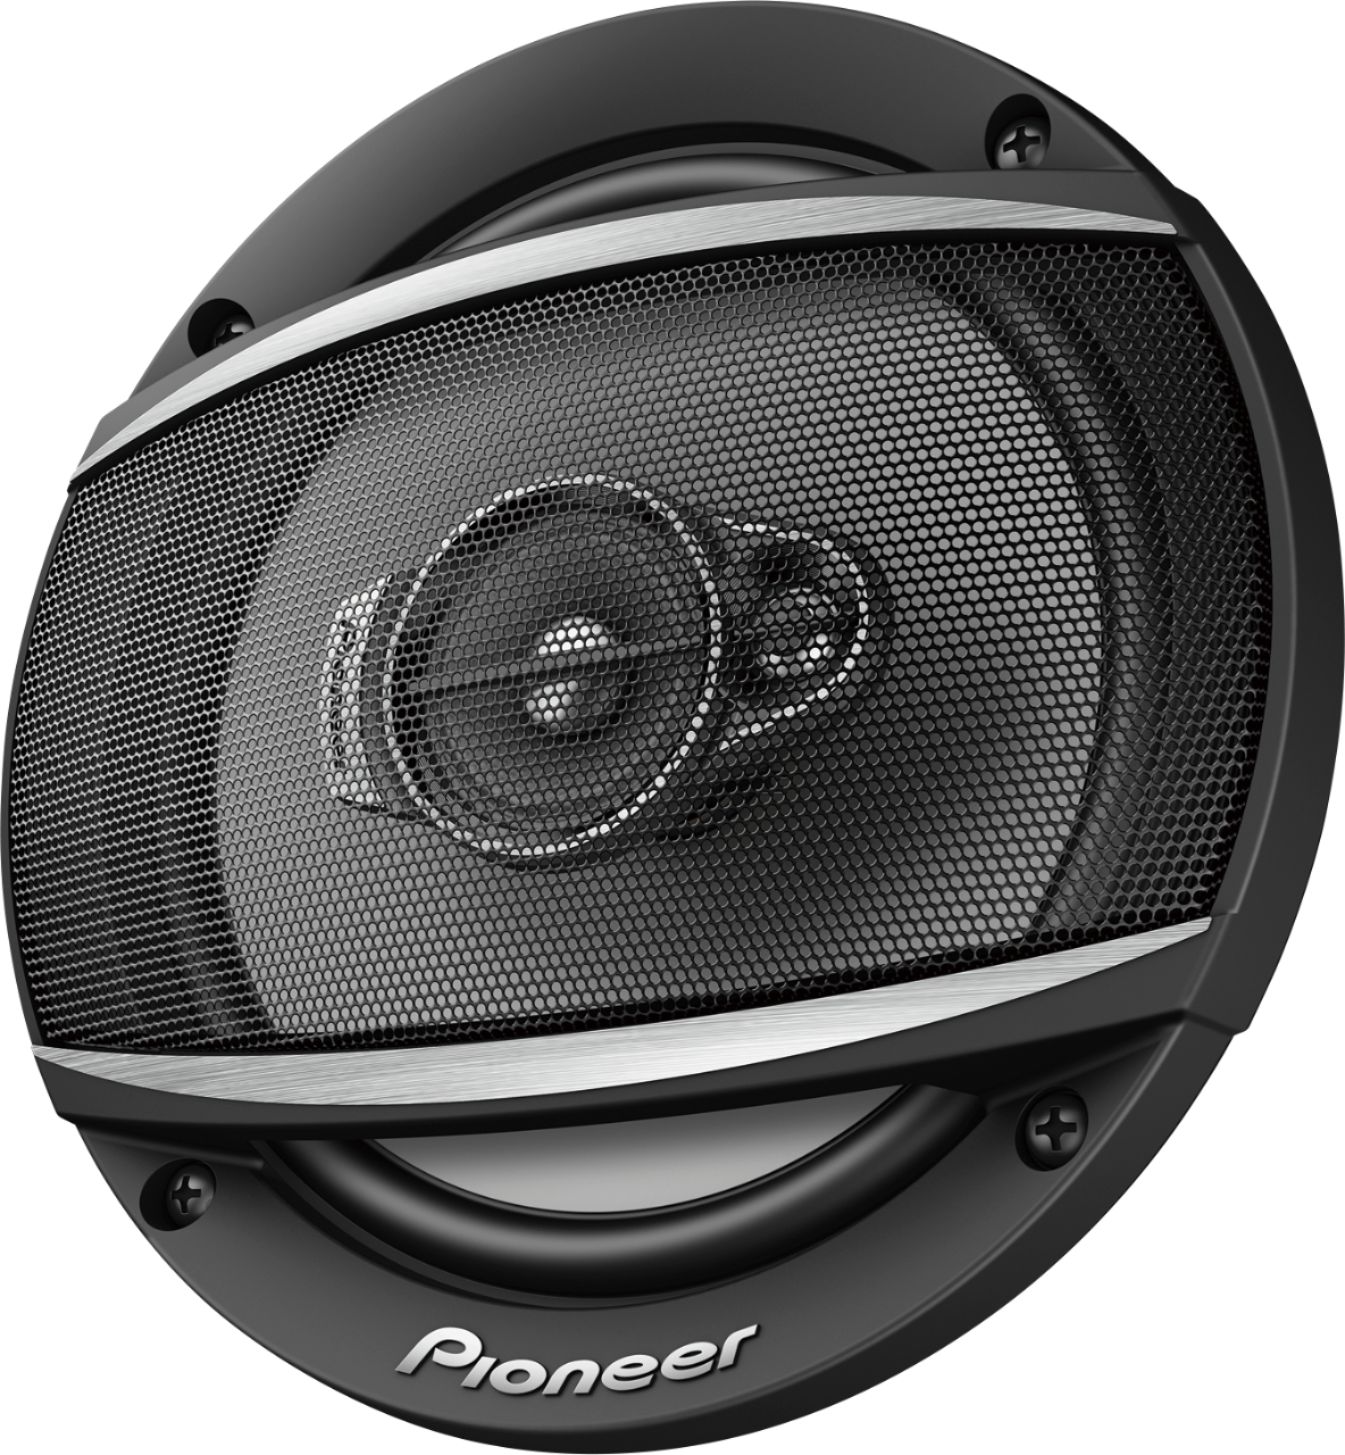 Angle View: Pioneer - 6-1/2" - 3-way, 320 W Max Power, IMPP™ cone, 11mm Tweeter and 1-5/8" Midrange - Coaxial Speakers (pair) - Black